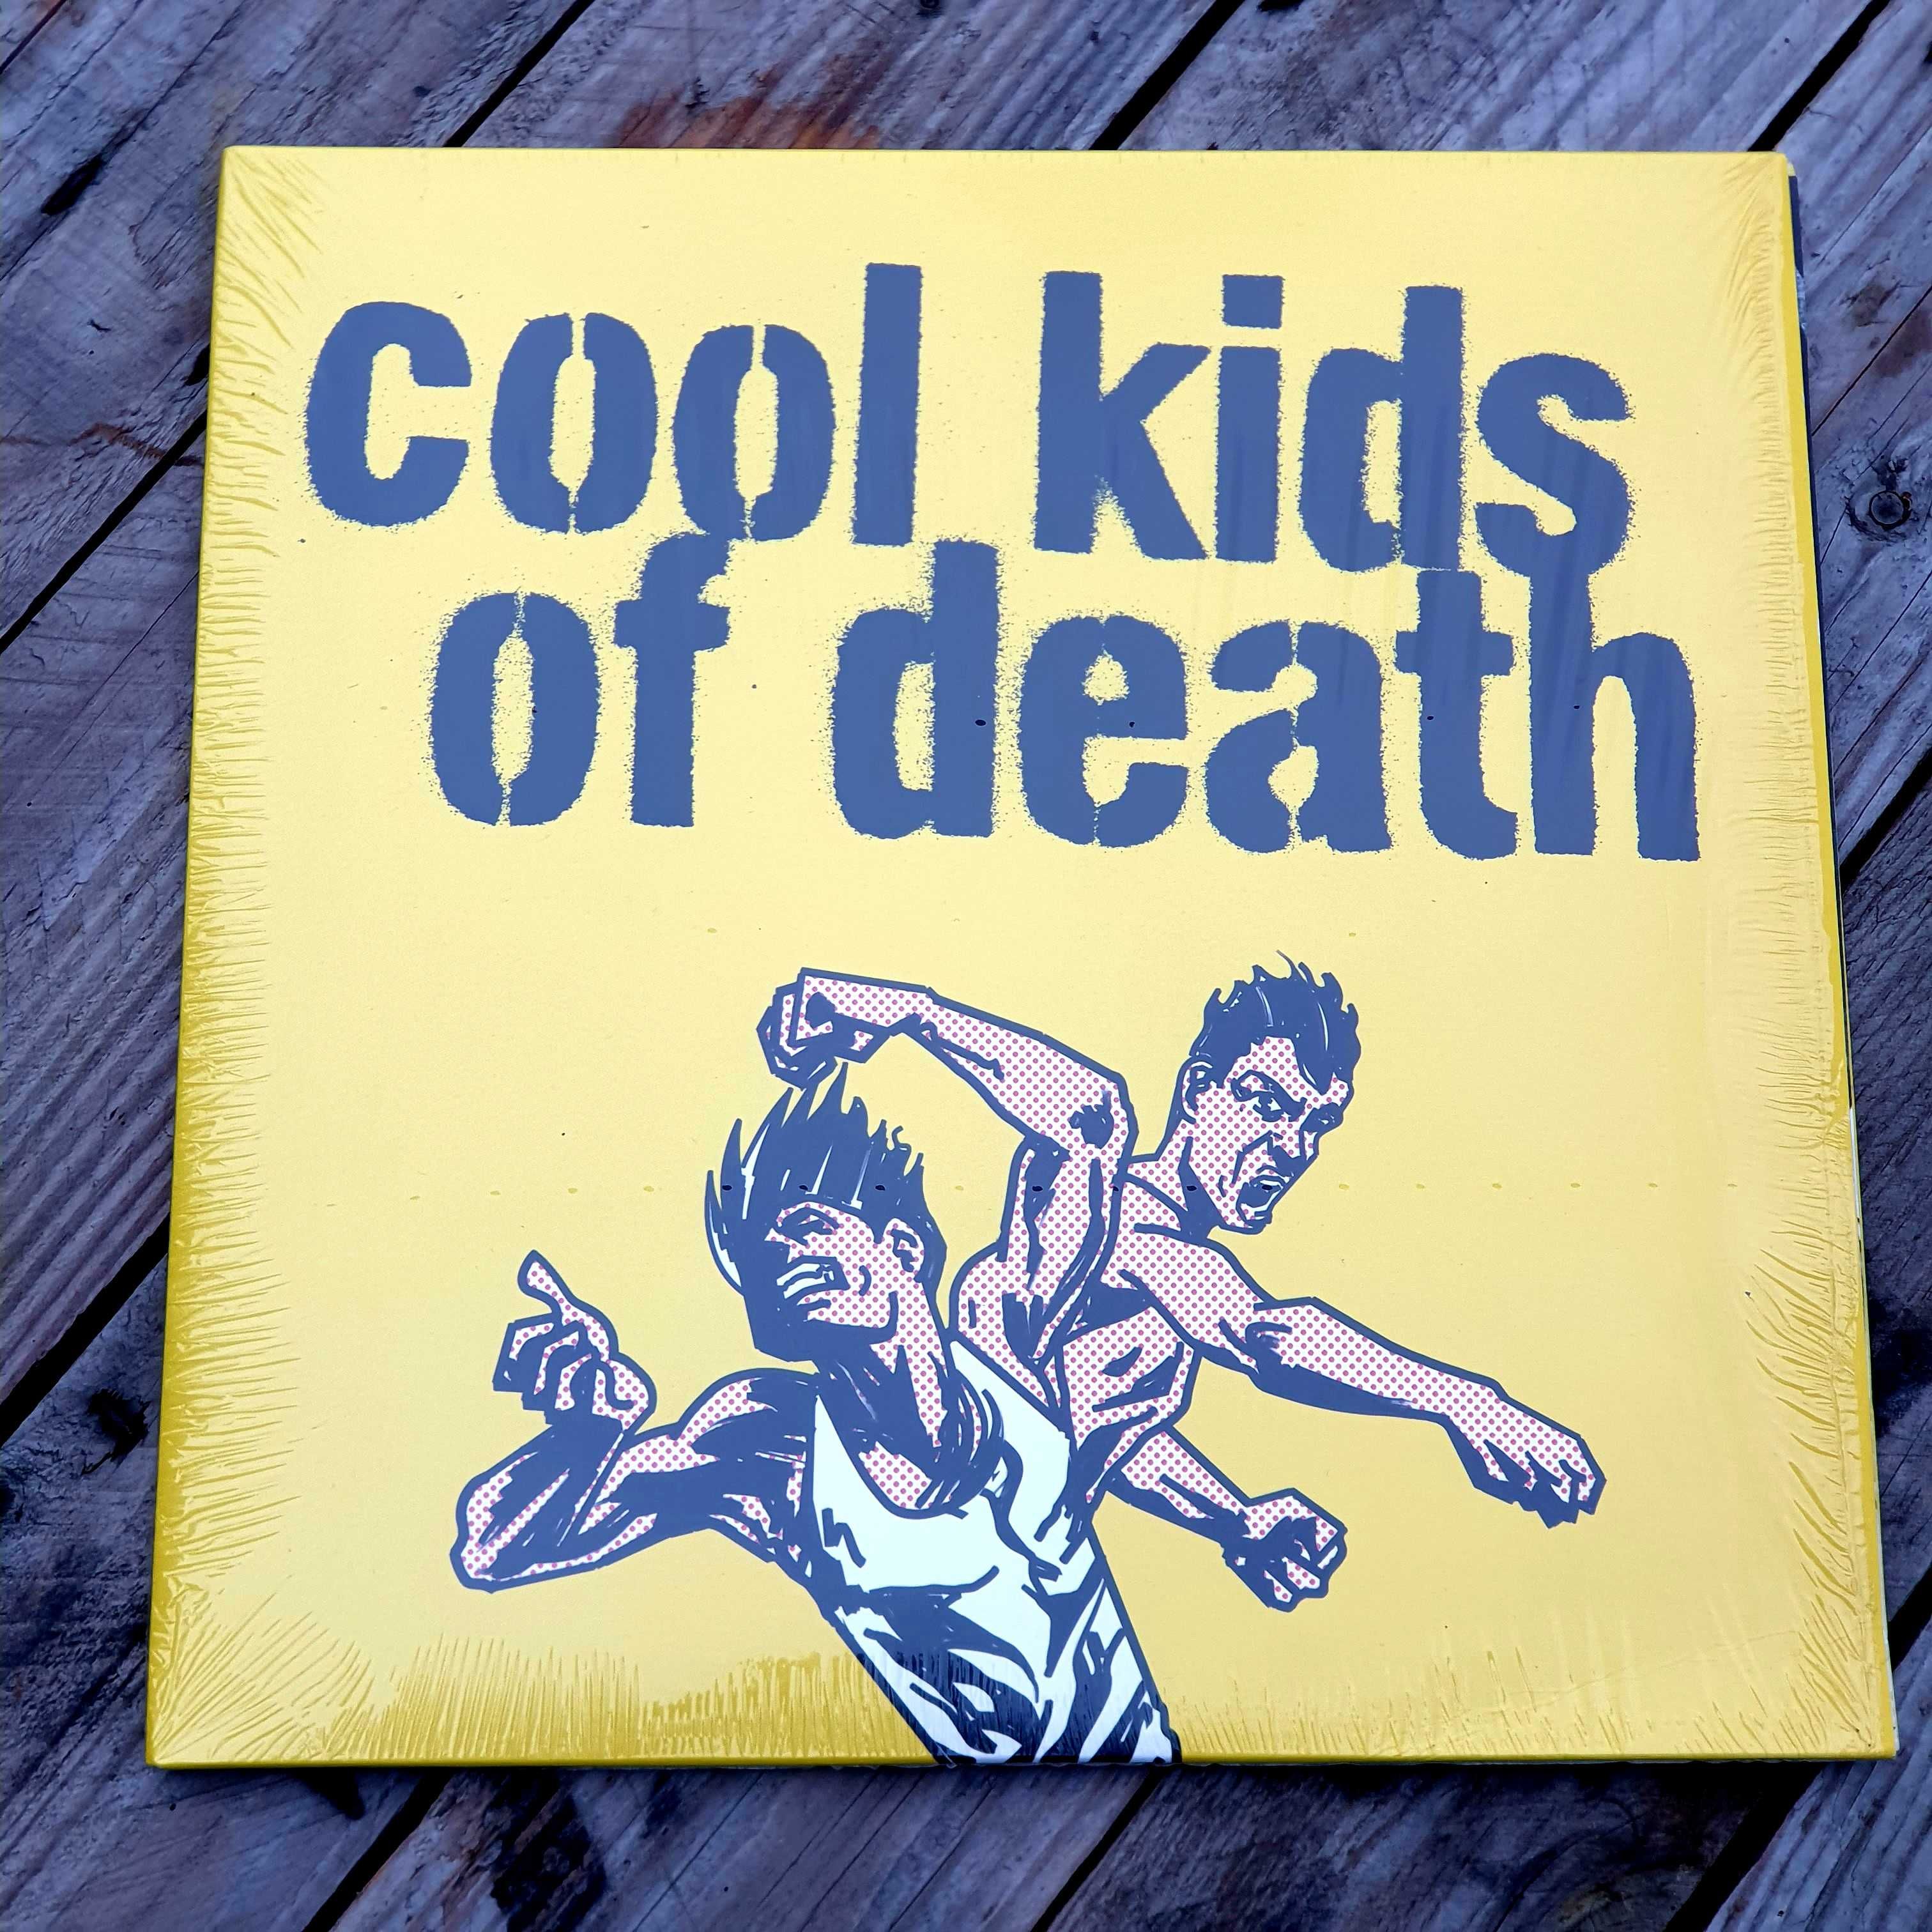 Cool Kids Of Death – Cool Kids Of Death - LP + 7' - Płyta Winylowa